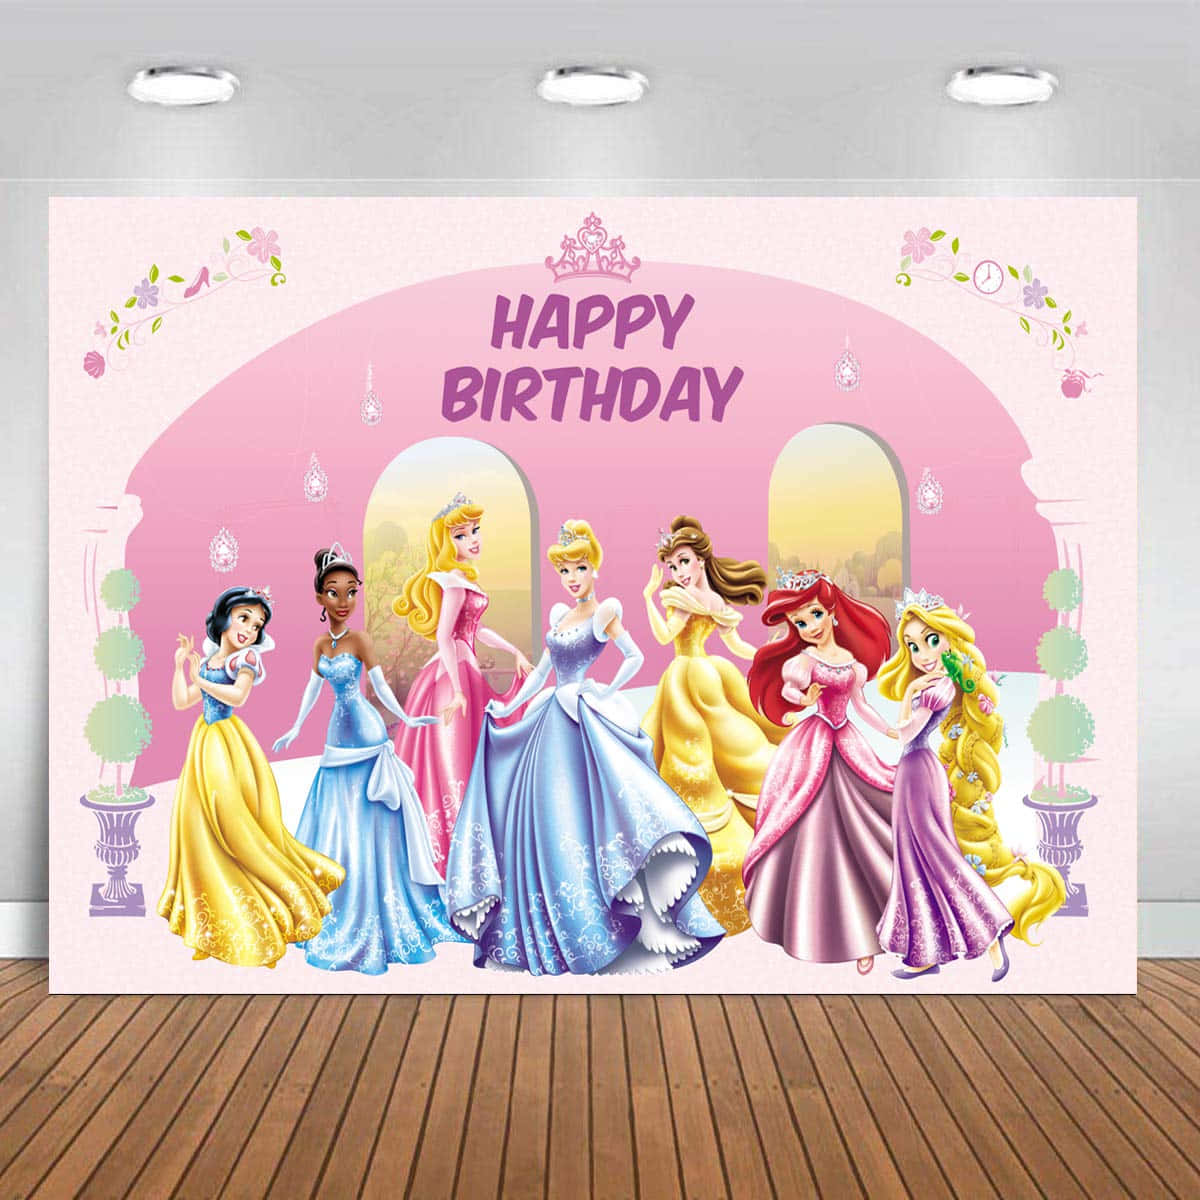 Celebrate True Love and Magic with Disney Princesses